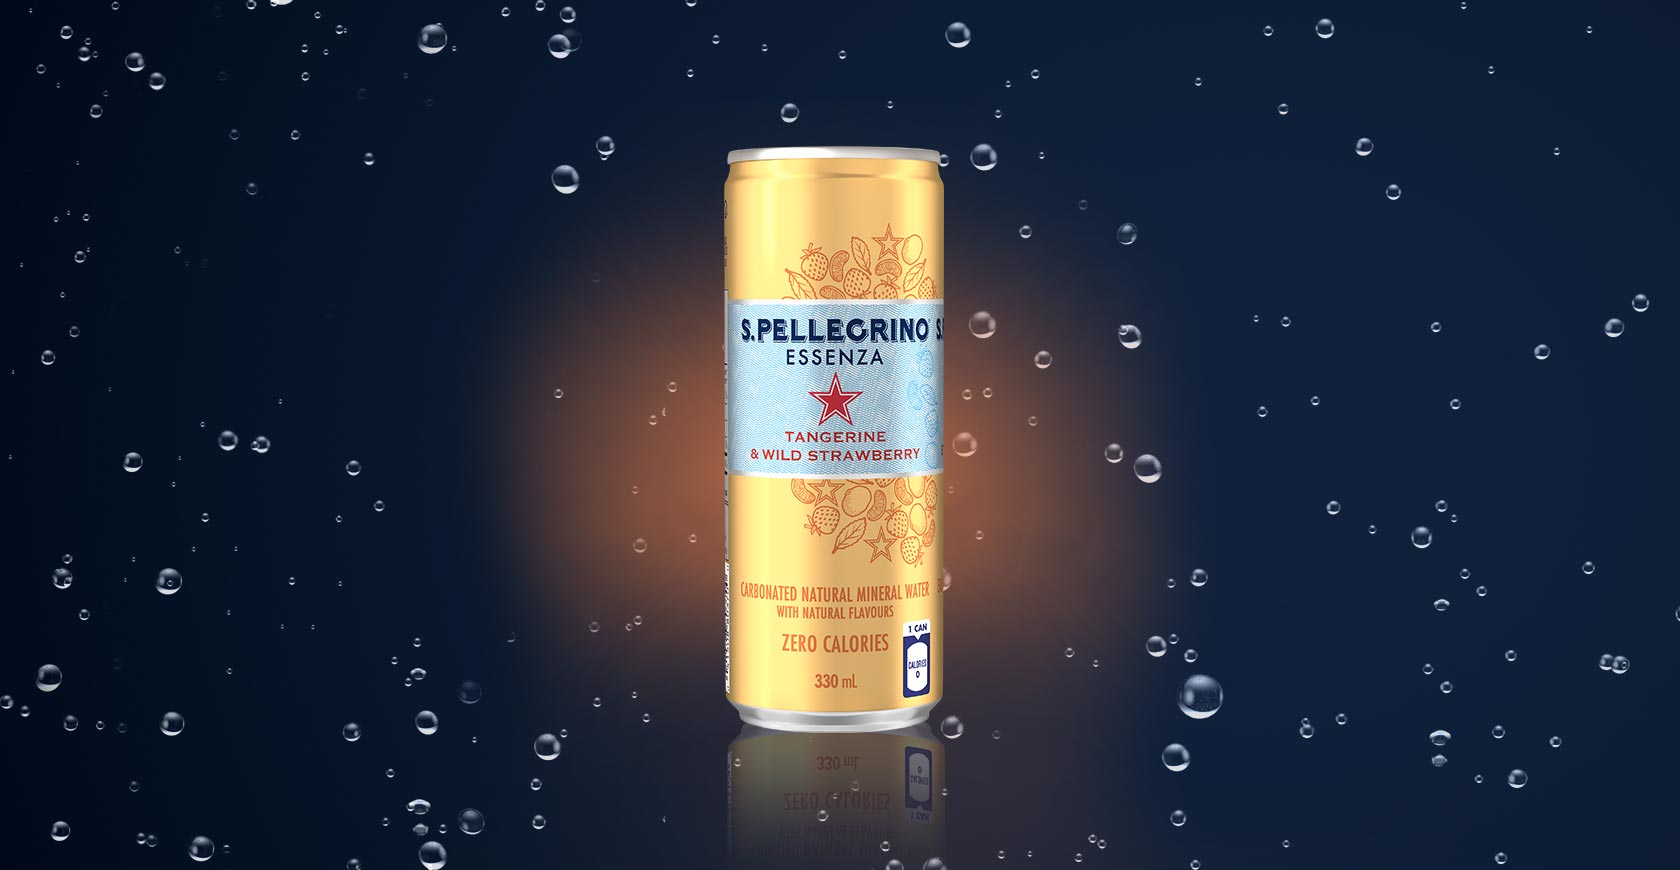 S. Pellegrino Essenza Tangerine & Wild Strawberry Flavoured Mineral Water with Co2 Added Zero Calories 330 ml น้ำแร่อัดแก๊สธรรมชาติ รสส้มและสตรอเบอร์รี่ ซานเพลิกริโน่ ขนาด 330ml (3007)